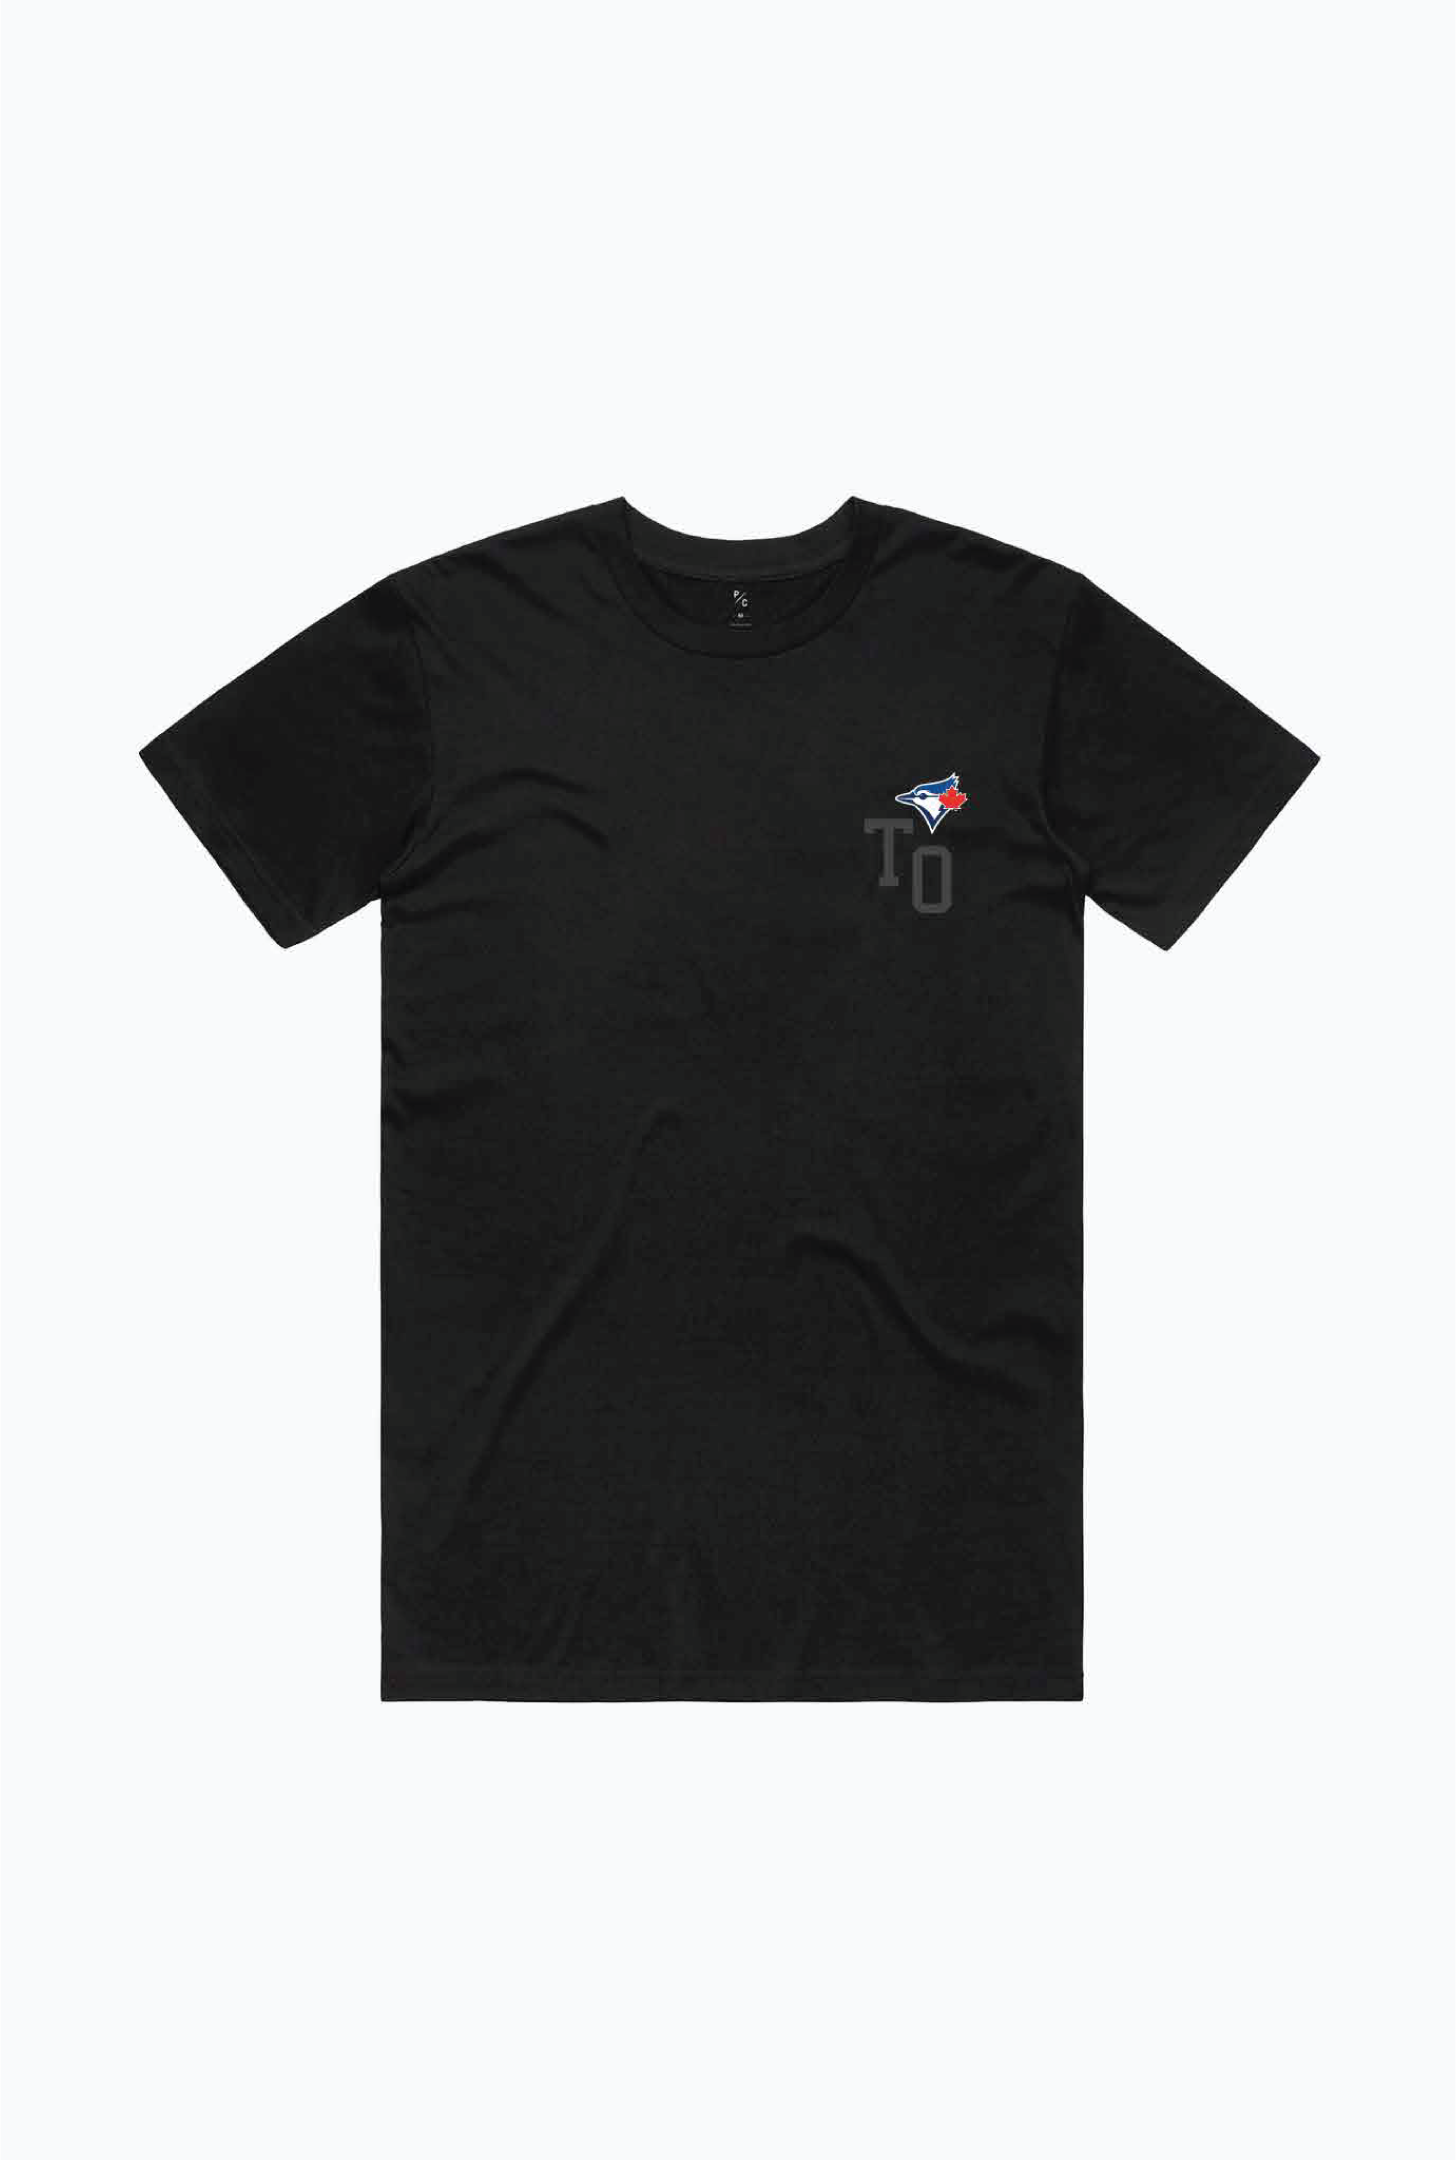 Final Sale - Blue Jays™ TO T-Shirt - Tonal Black